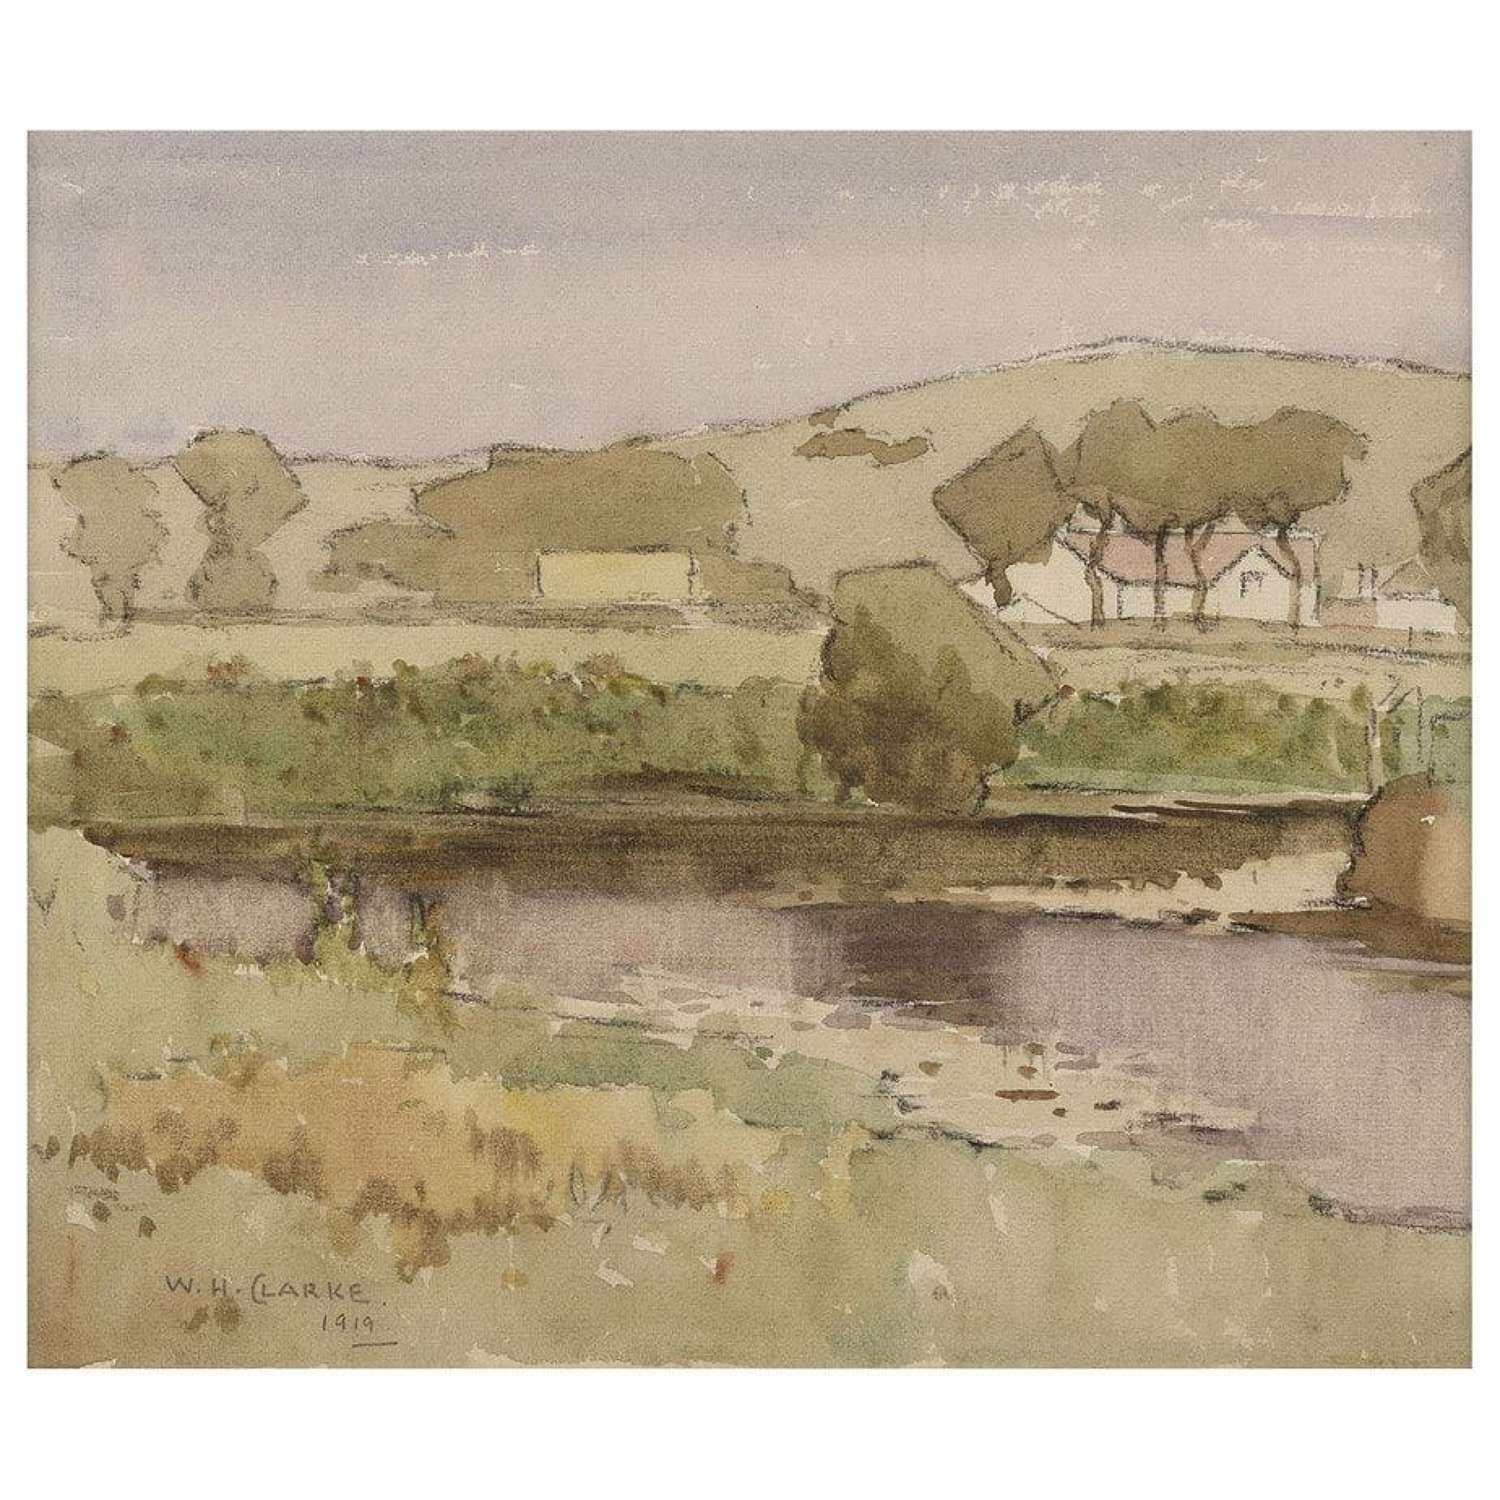 William Hanna Clarke - A Galloway Landscape